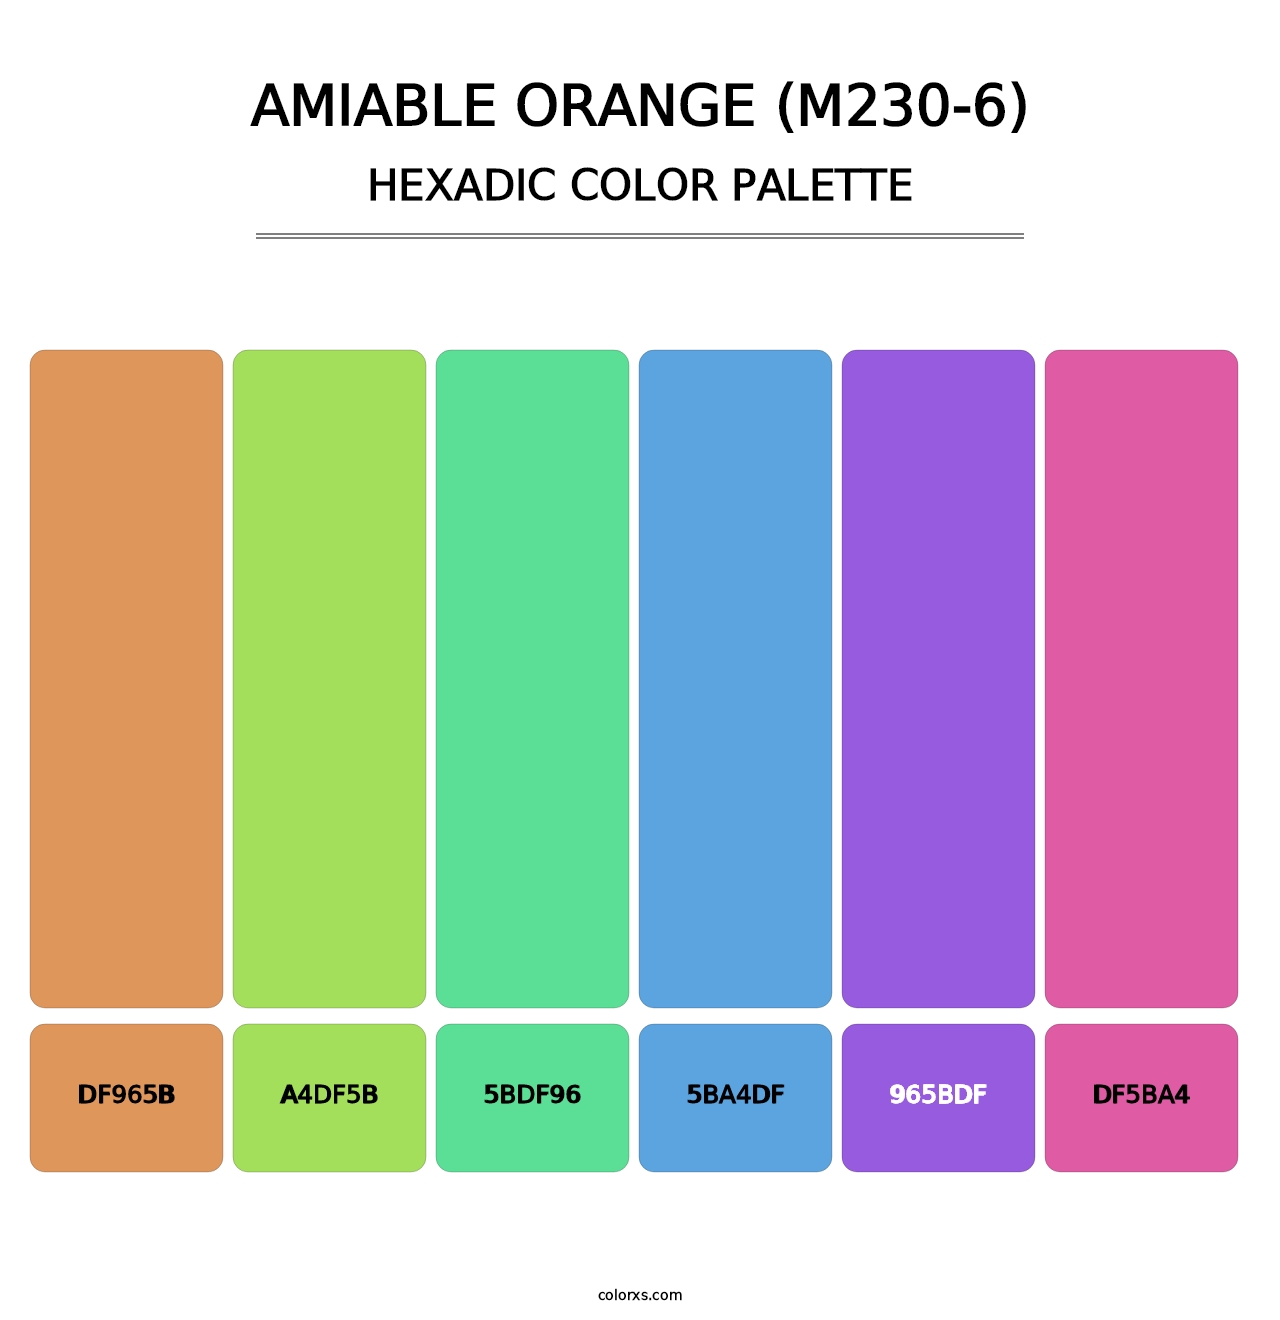 Amiable Orange (M230-6) - Hexadic Color Palette